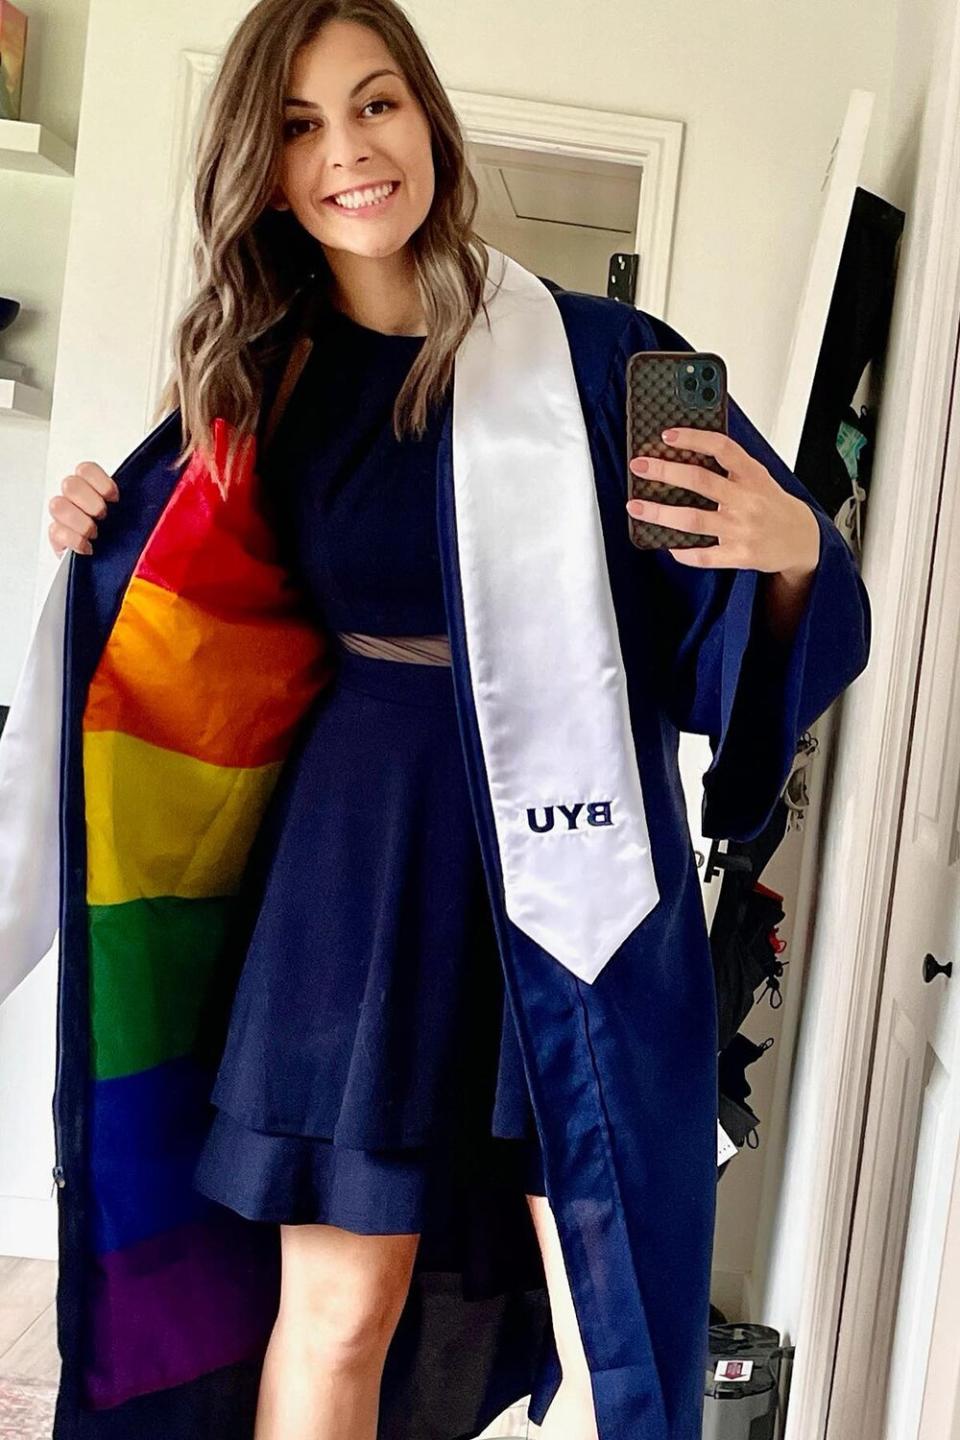 Jillian Orr, BYU Graduate Sews Rainbow Flag Into Graduation Gown to Protest School’s LGBTQ Policies